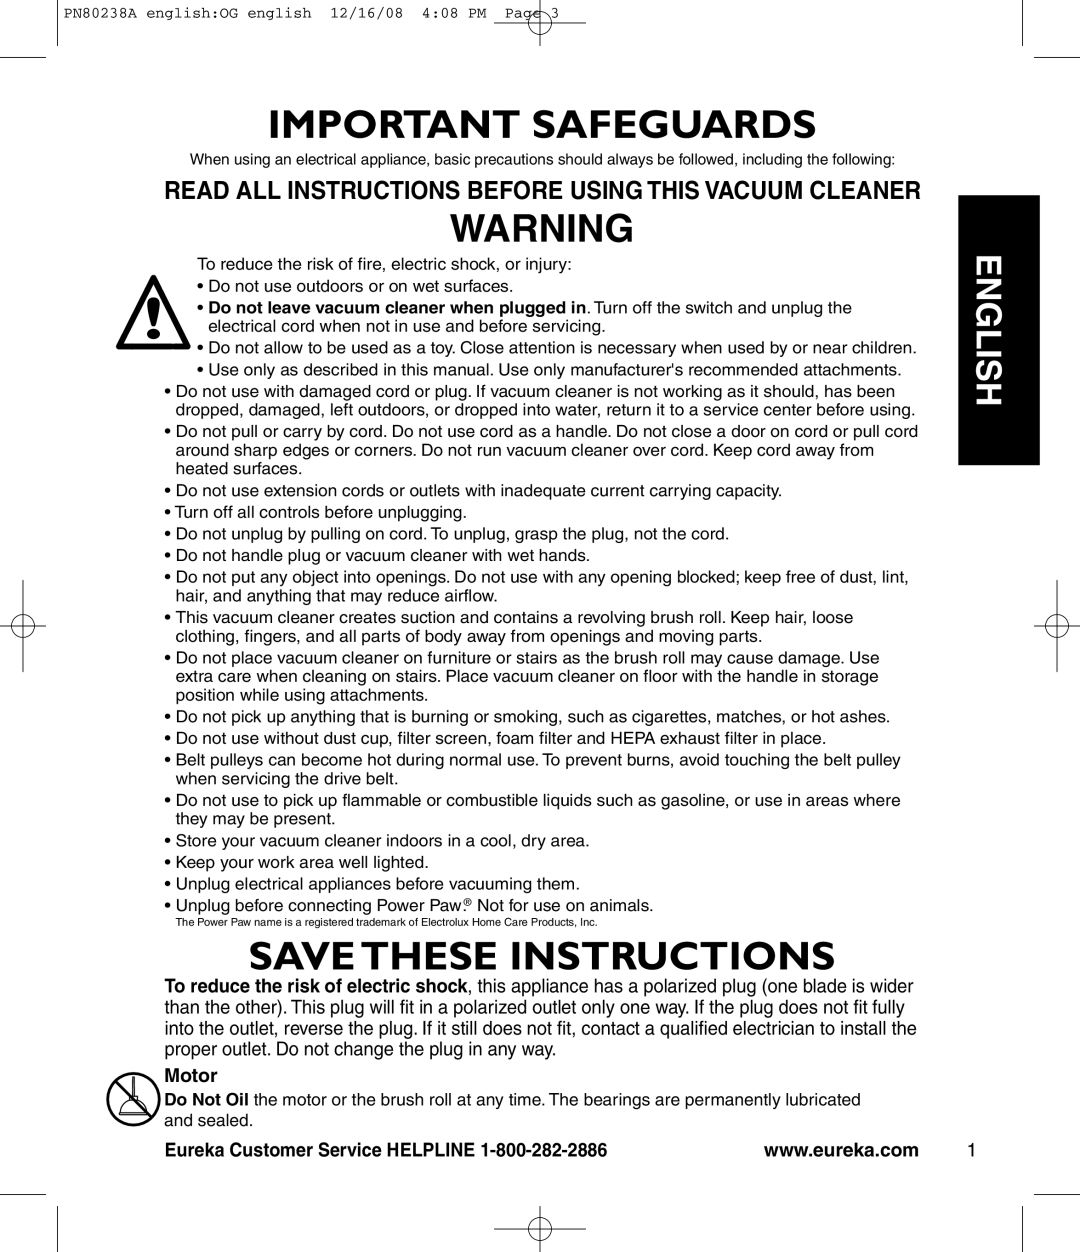 Eureka upright vacuum cleaner household type manual English, Motor, Important Safeguards, Save These Instructions 